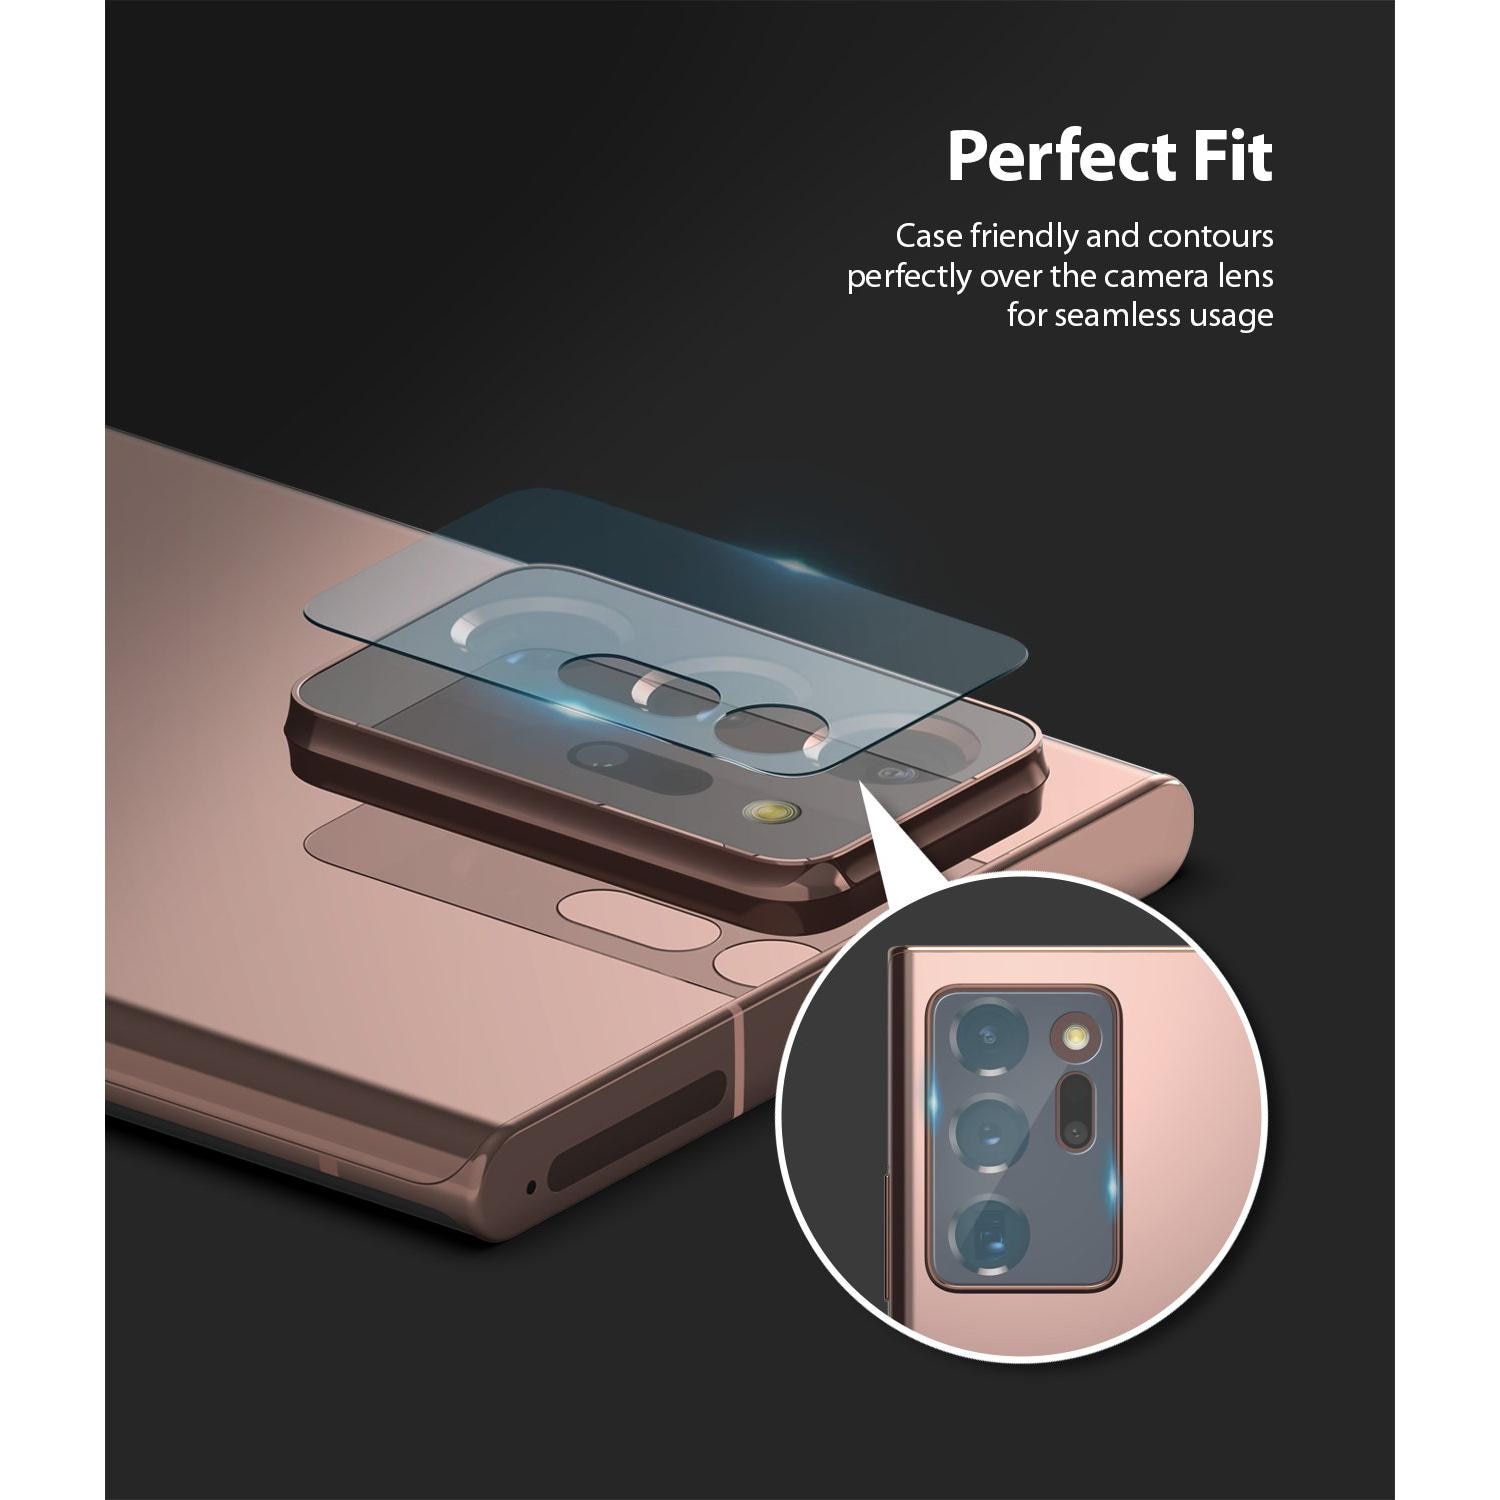 ID Glass Camera Protector Samsung Galaxy Note 20 Ultra